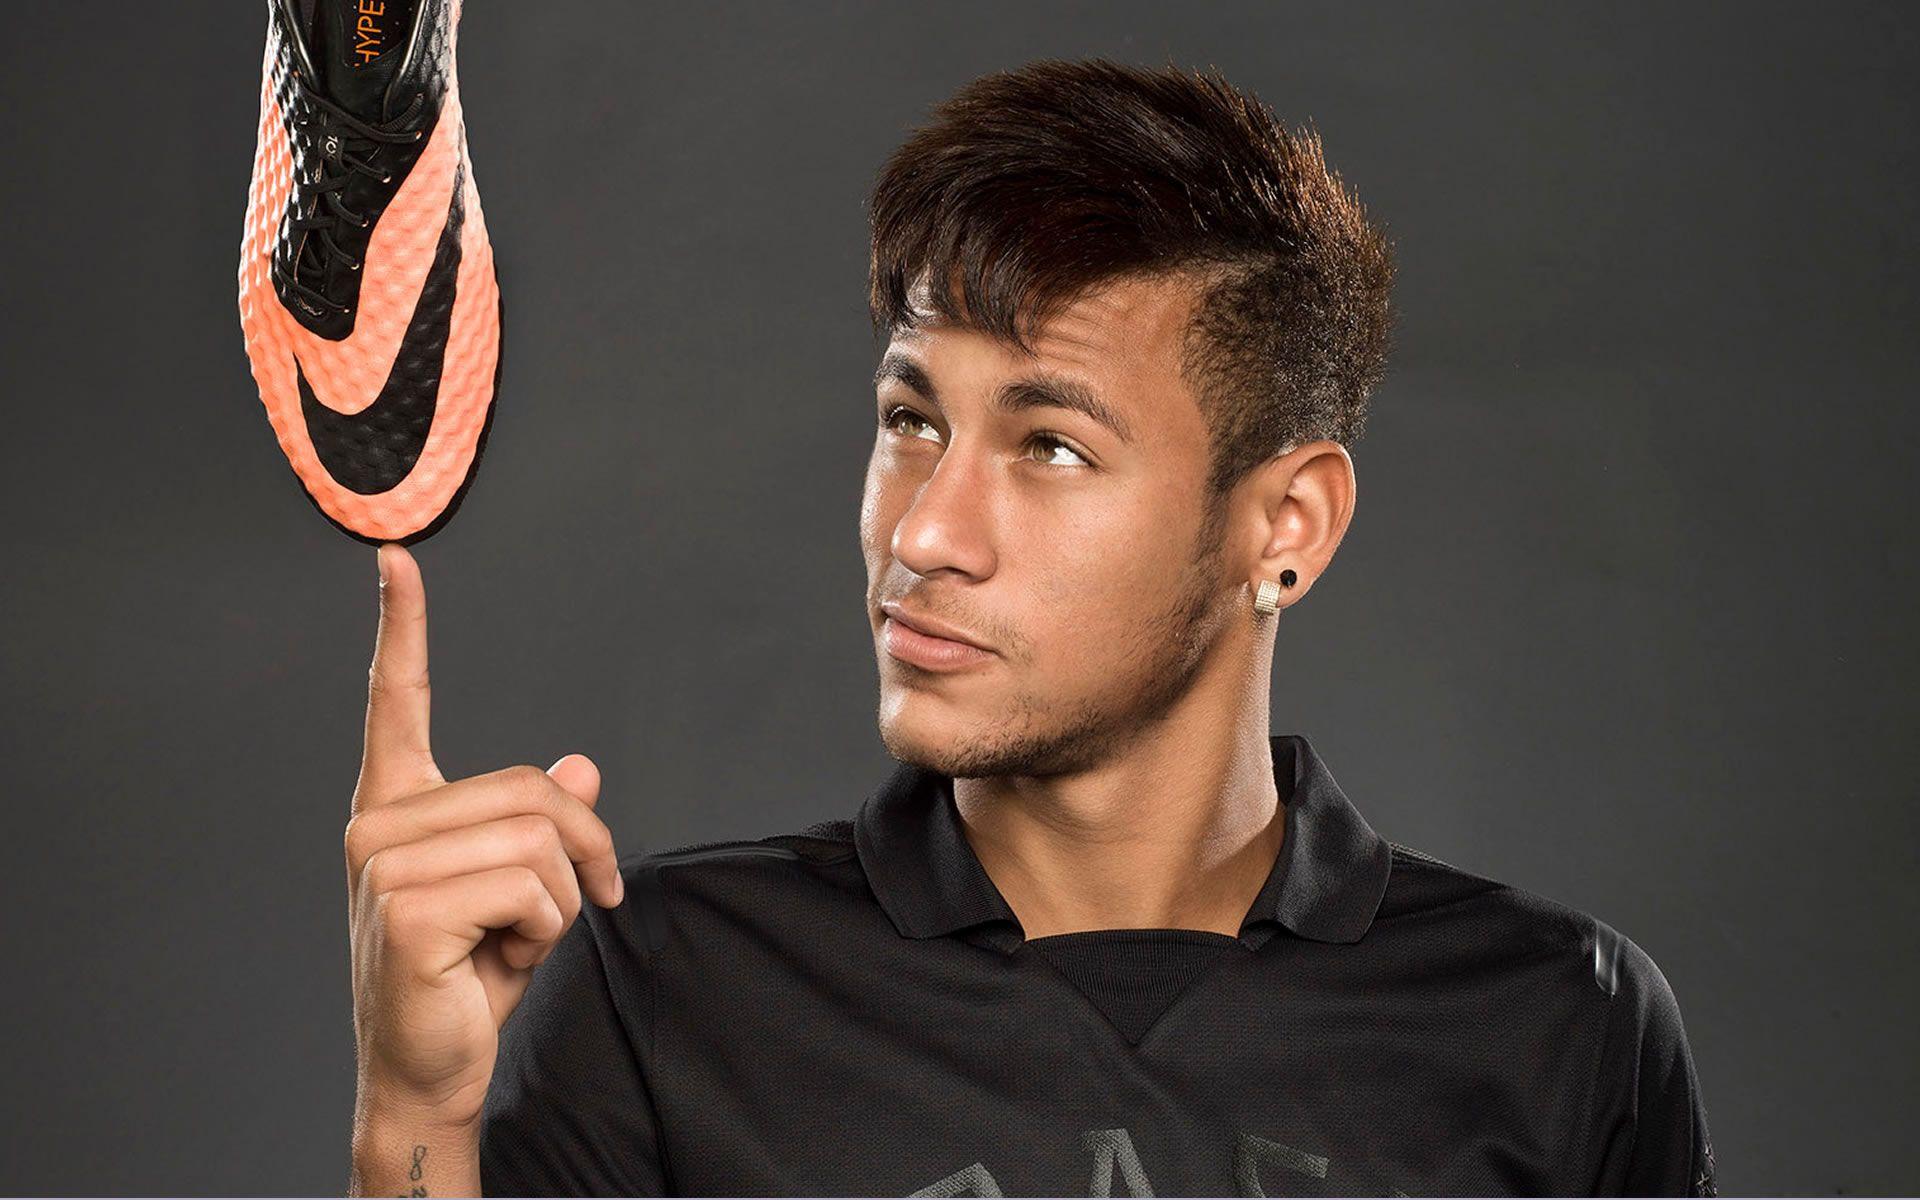 Cool Neymar Wallpaper HD